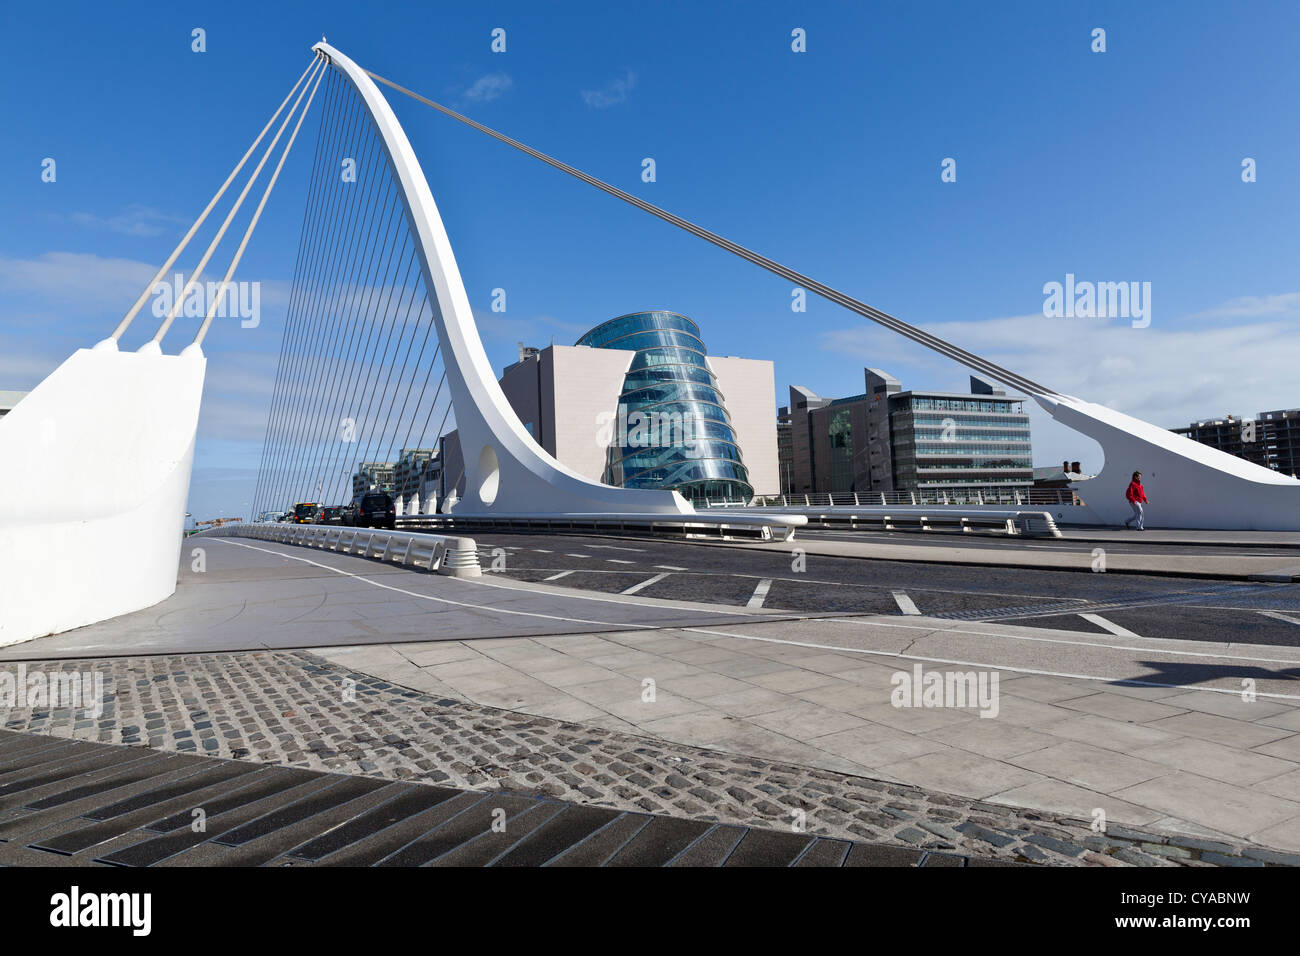 The Samuel beckett bridge in Dublin, designed by Santiago Calatrava. Stock Photo